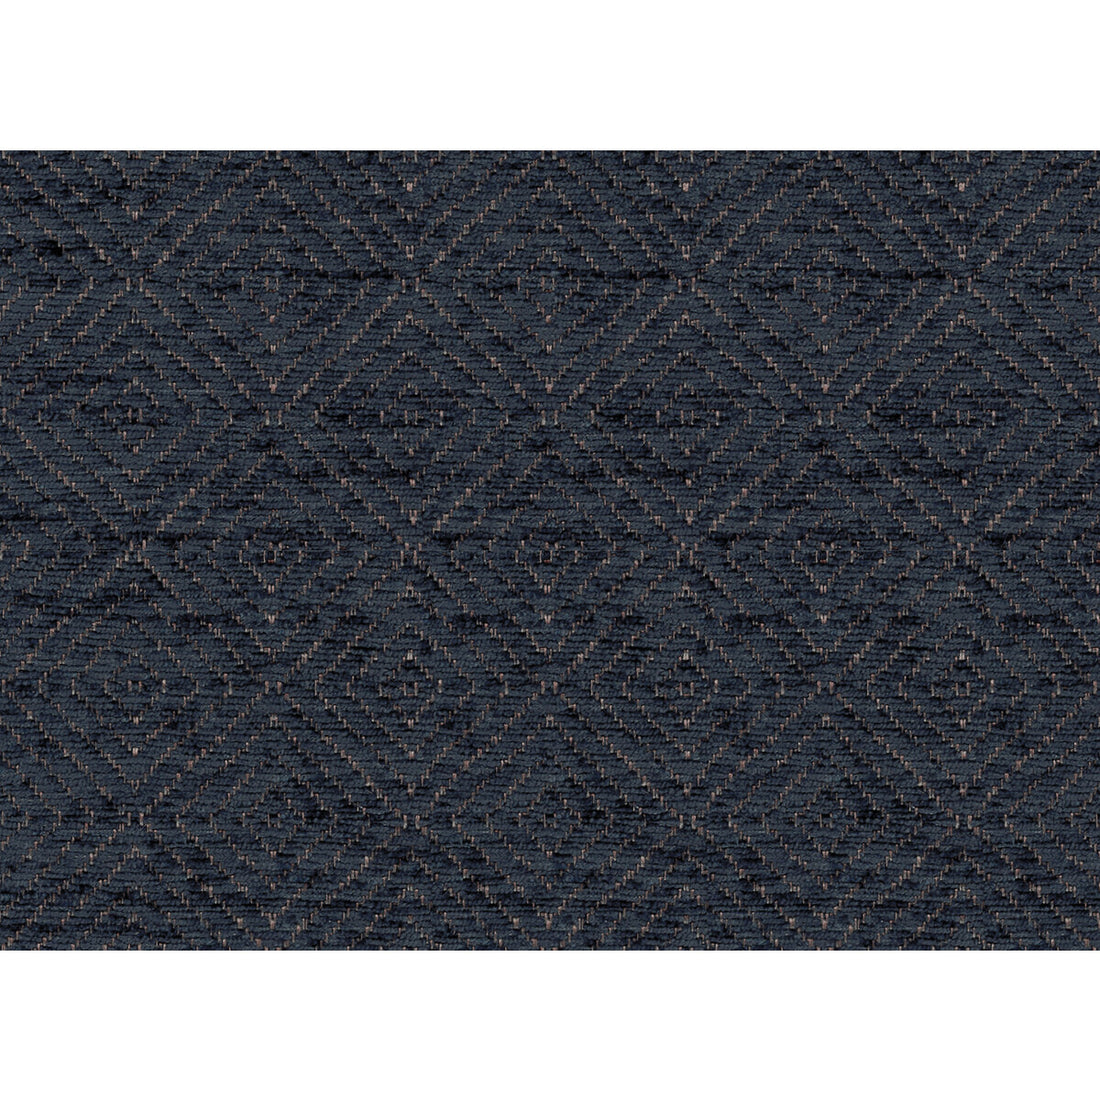 Kravet Smart fabric in 34345-50 color - pattern 34345.50.0 - by Kravet Smart